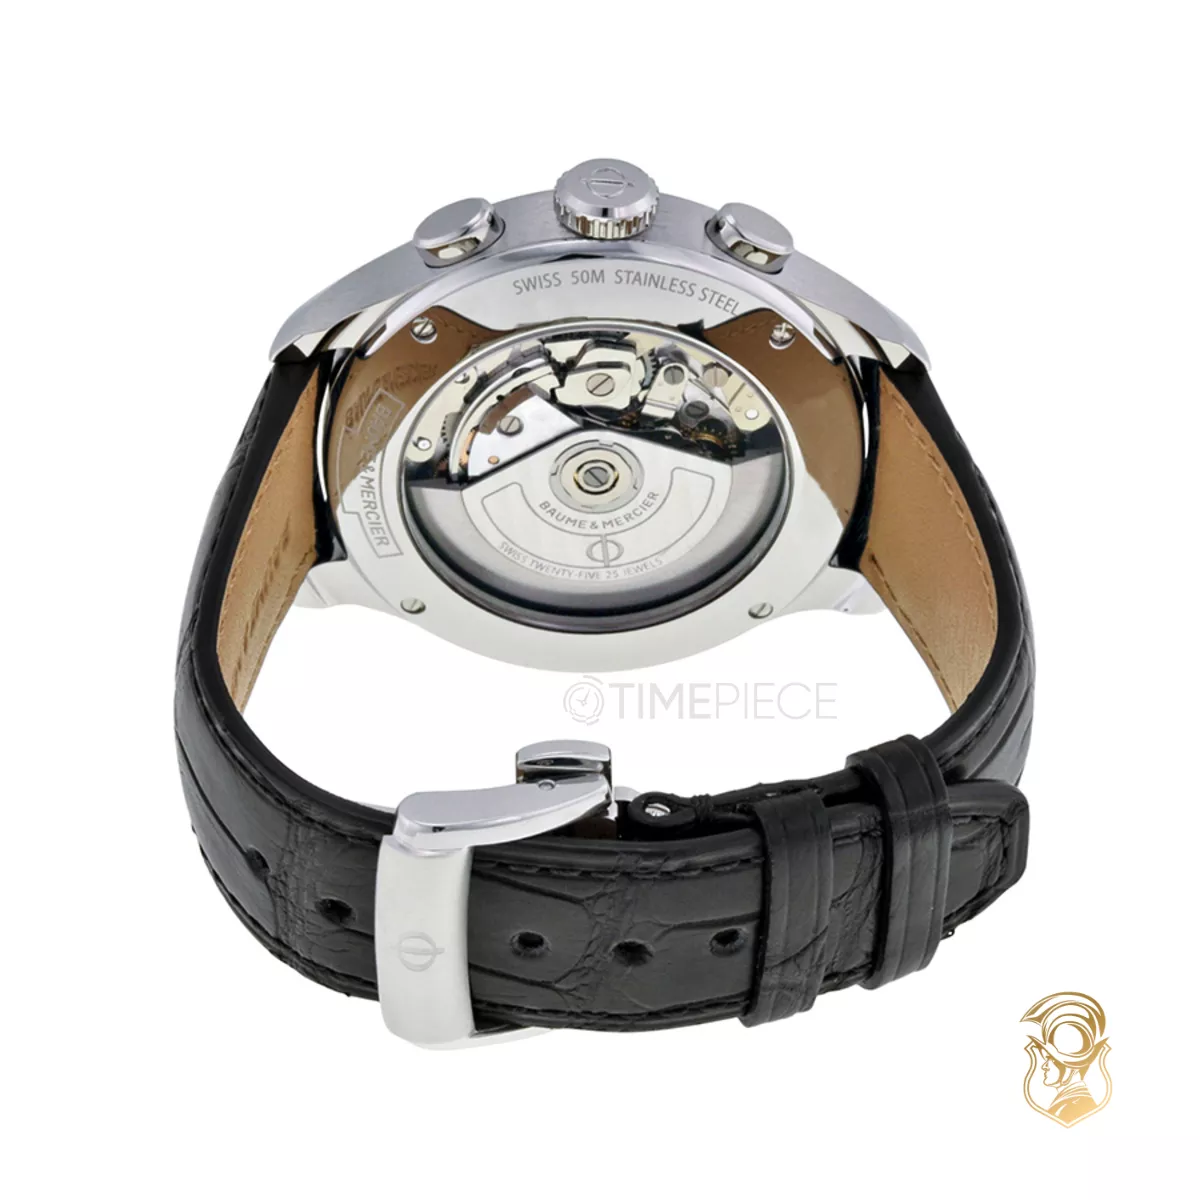 Baume & Mercier Clifton 10211 Automatic Watch 43mm